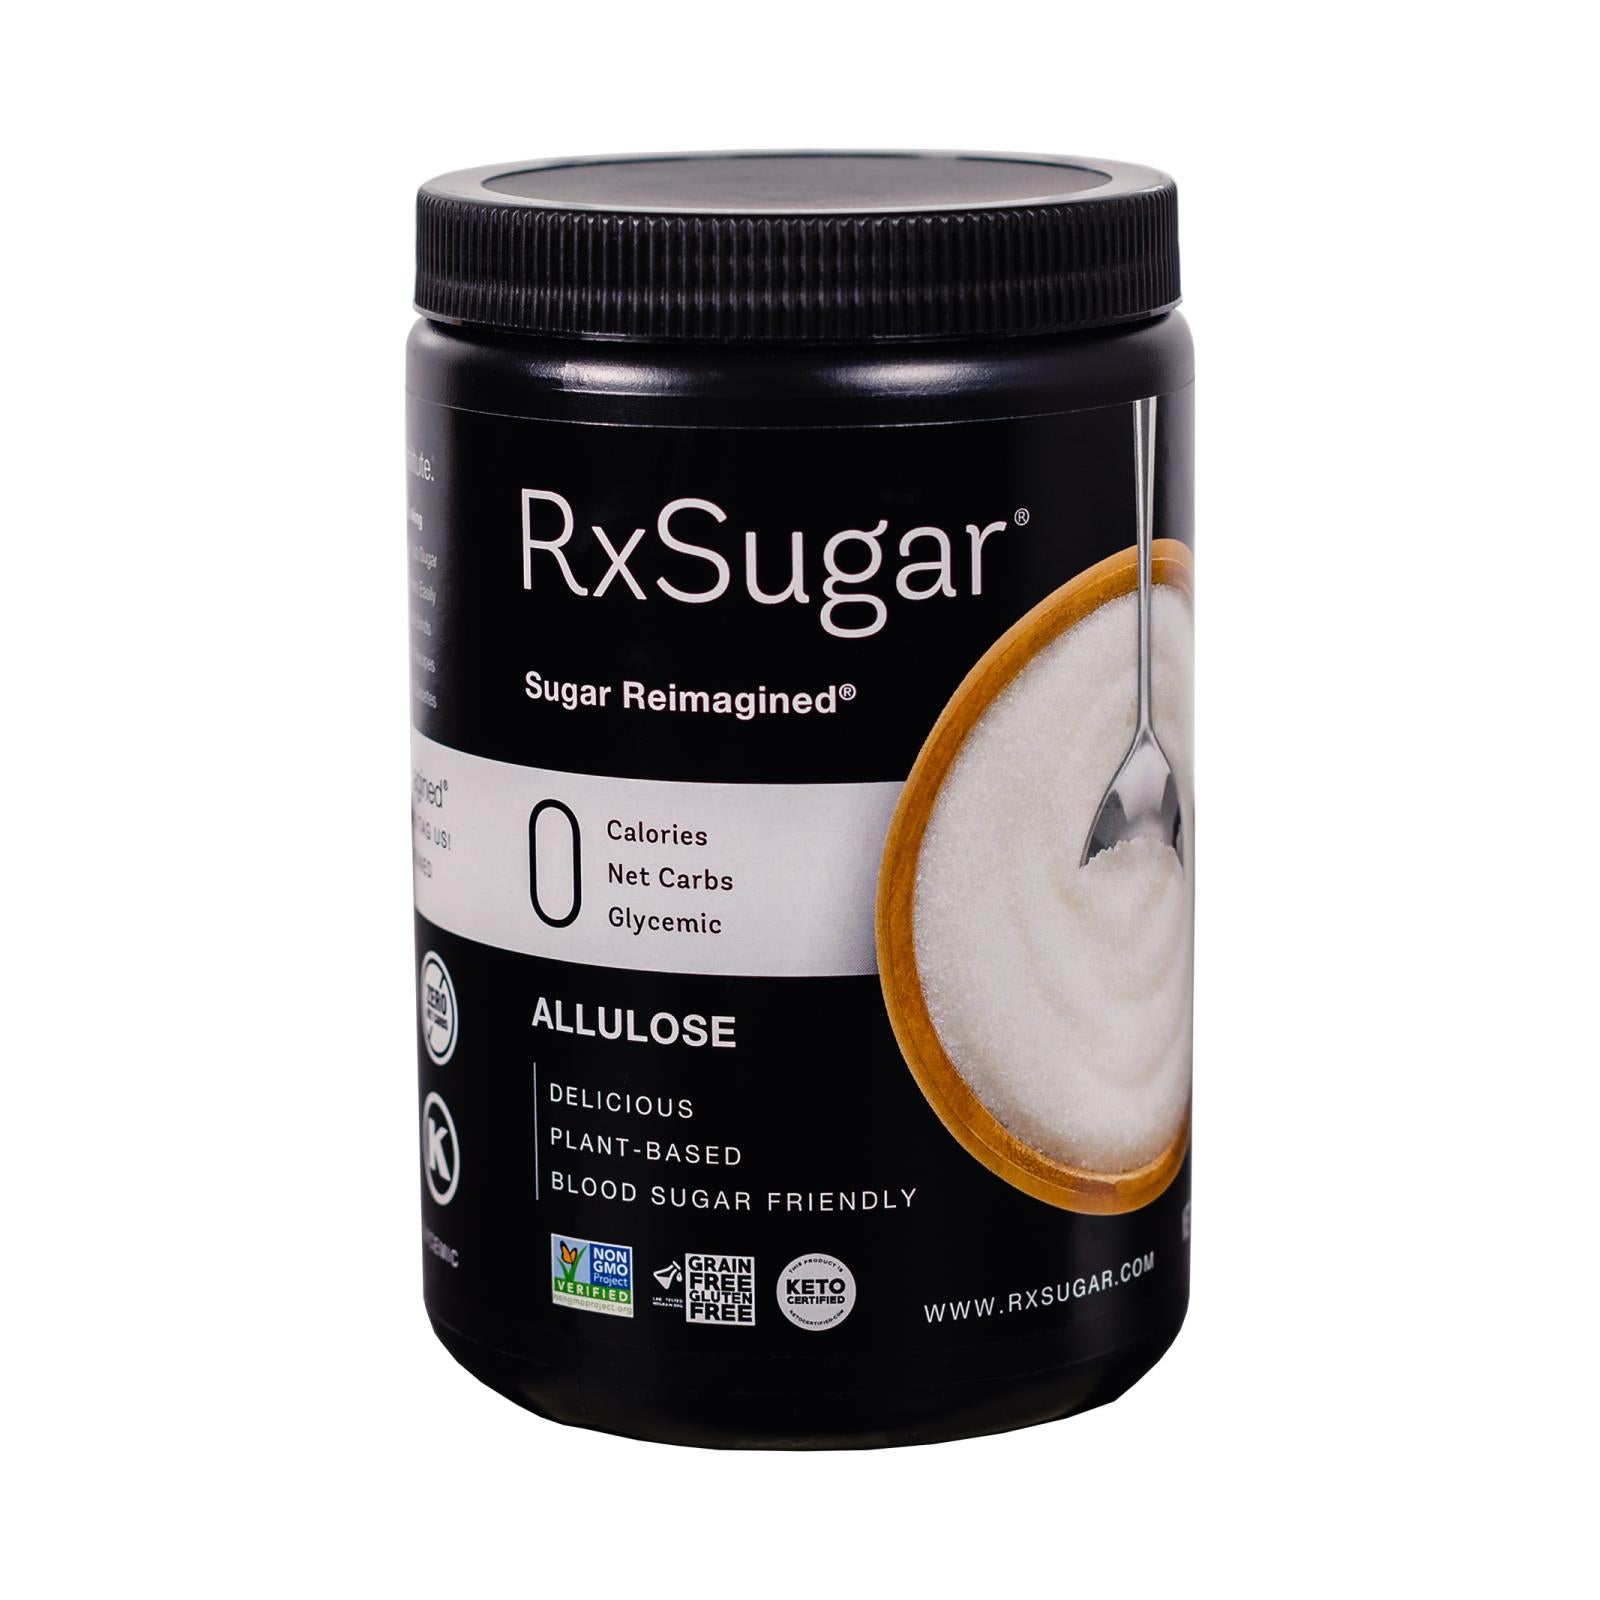 Rxsugar - Sugar One Pound Canister - Case Of 6 - 16 Oz